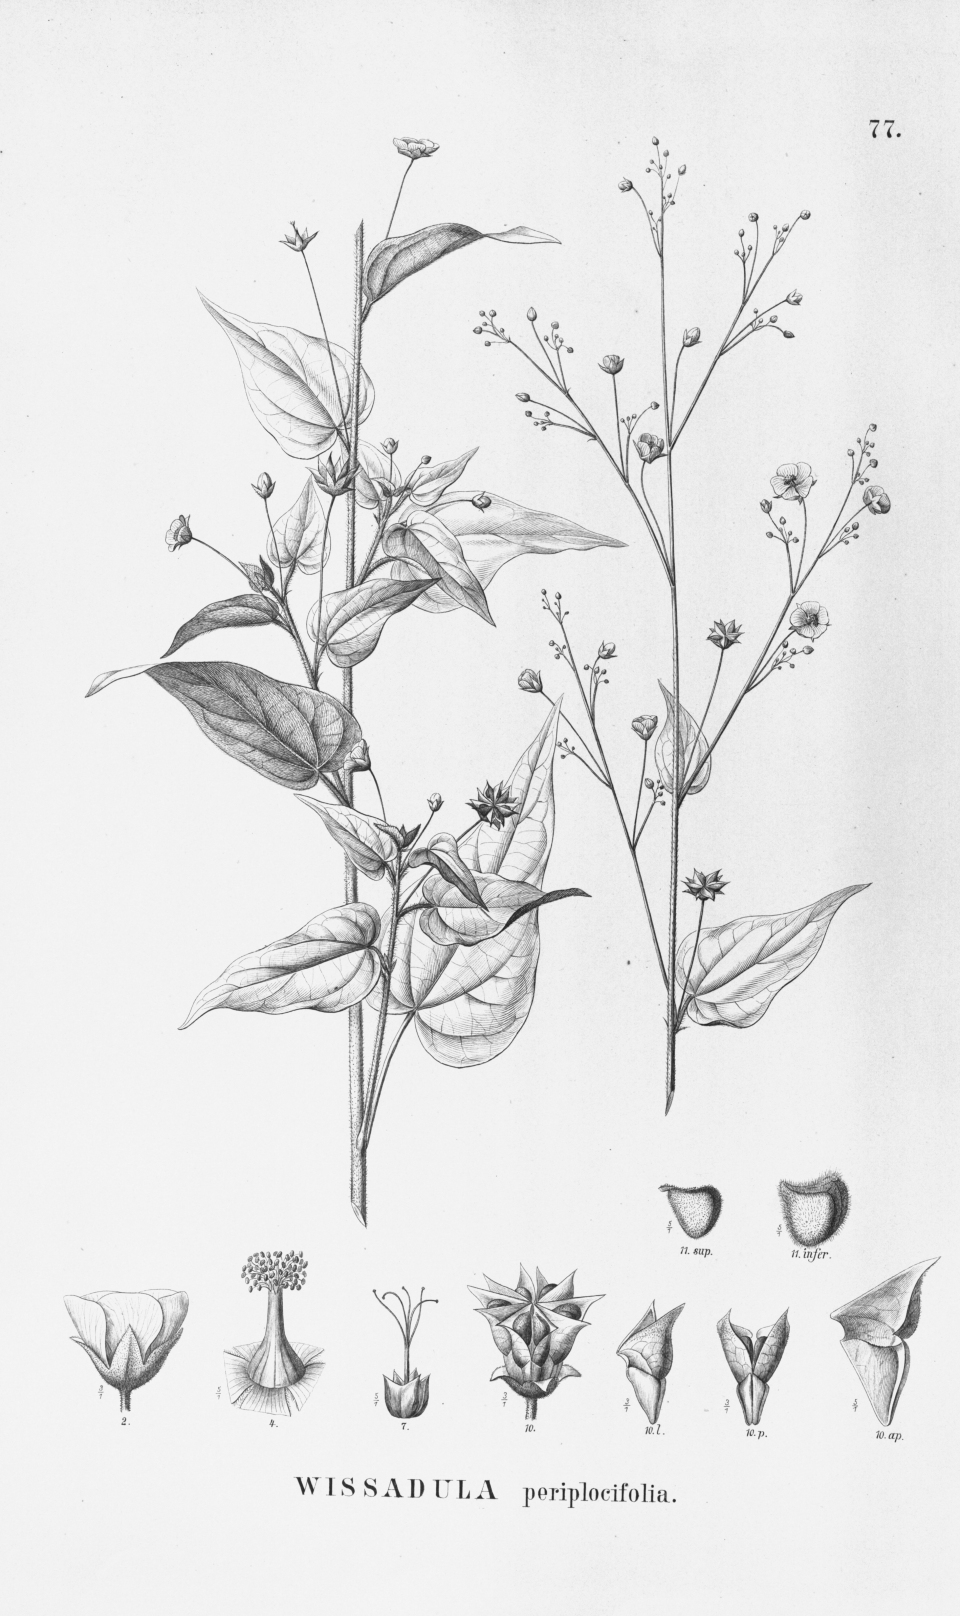 Wissadula periplocifolia